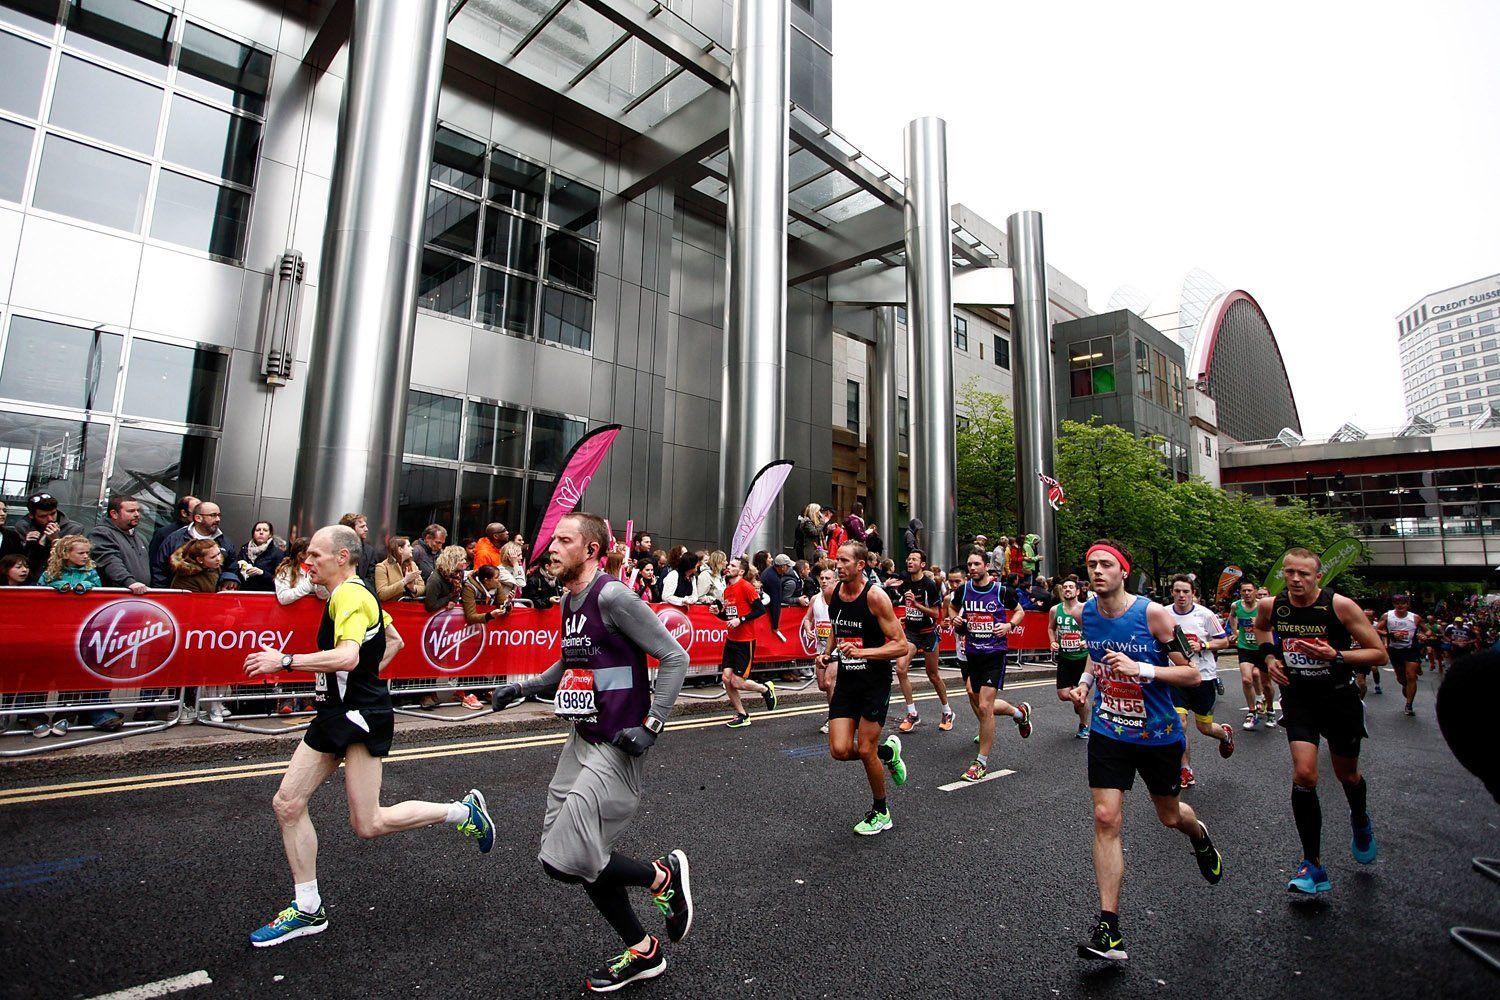 London Marathon 2016: The best wrist water bottles for runners